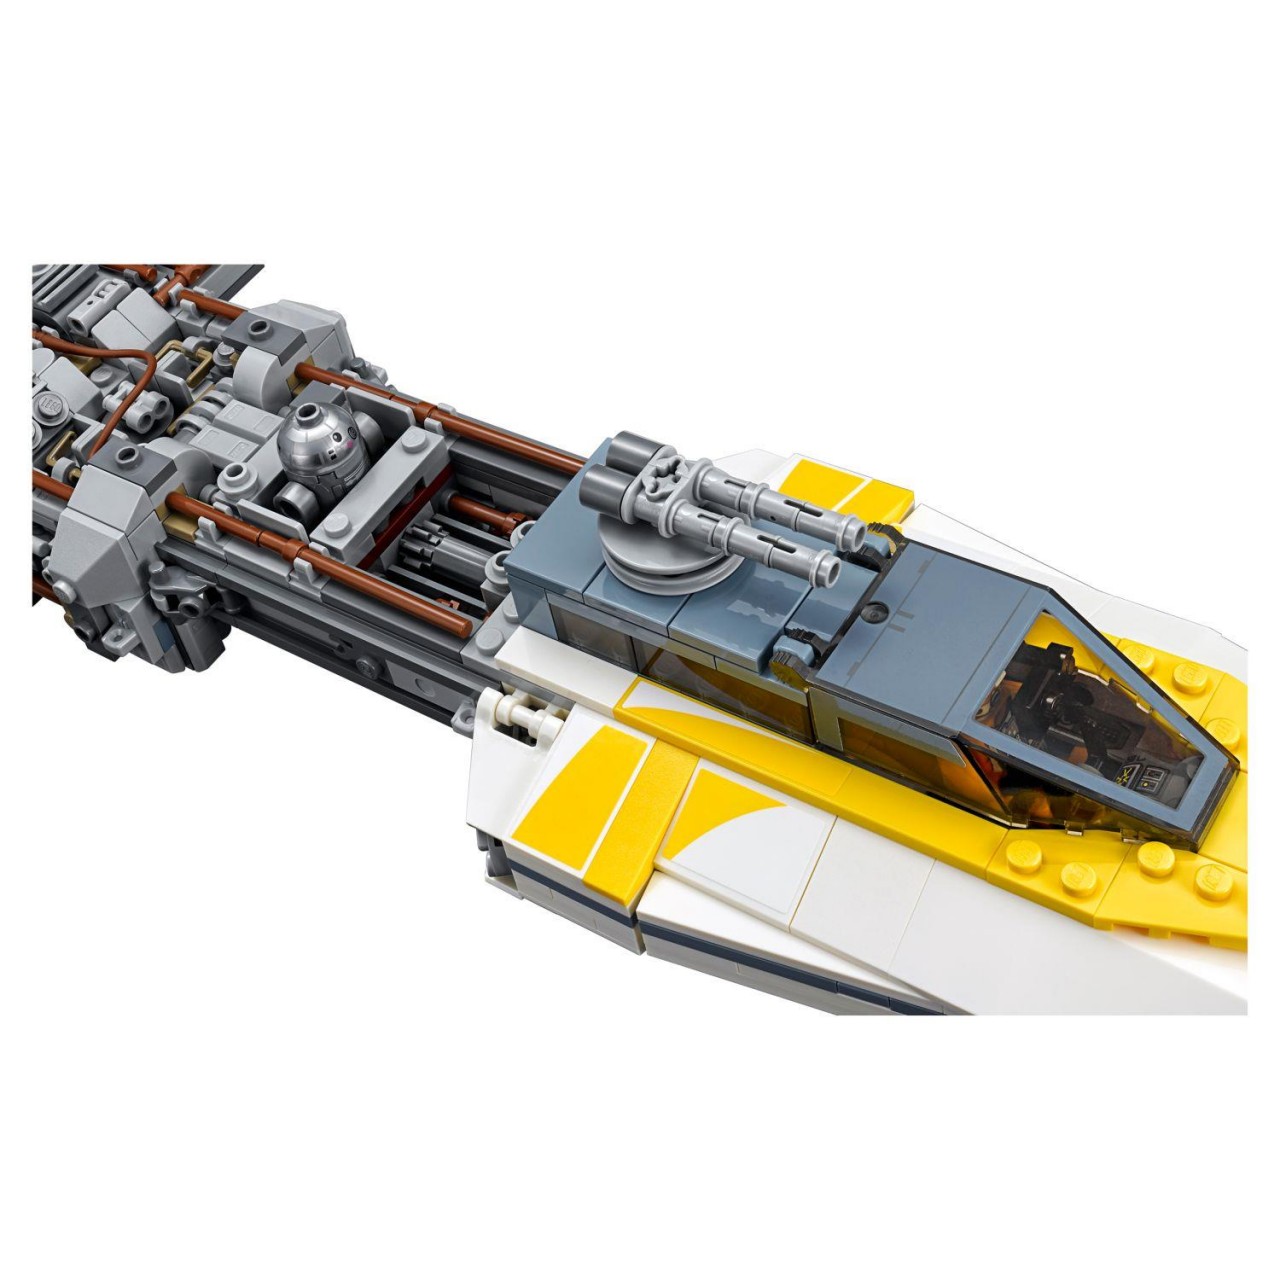 LEGO STAR WARS 75181 Y-Wing Starfighter